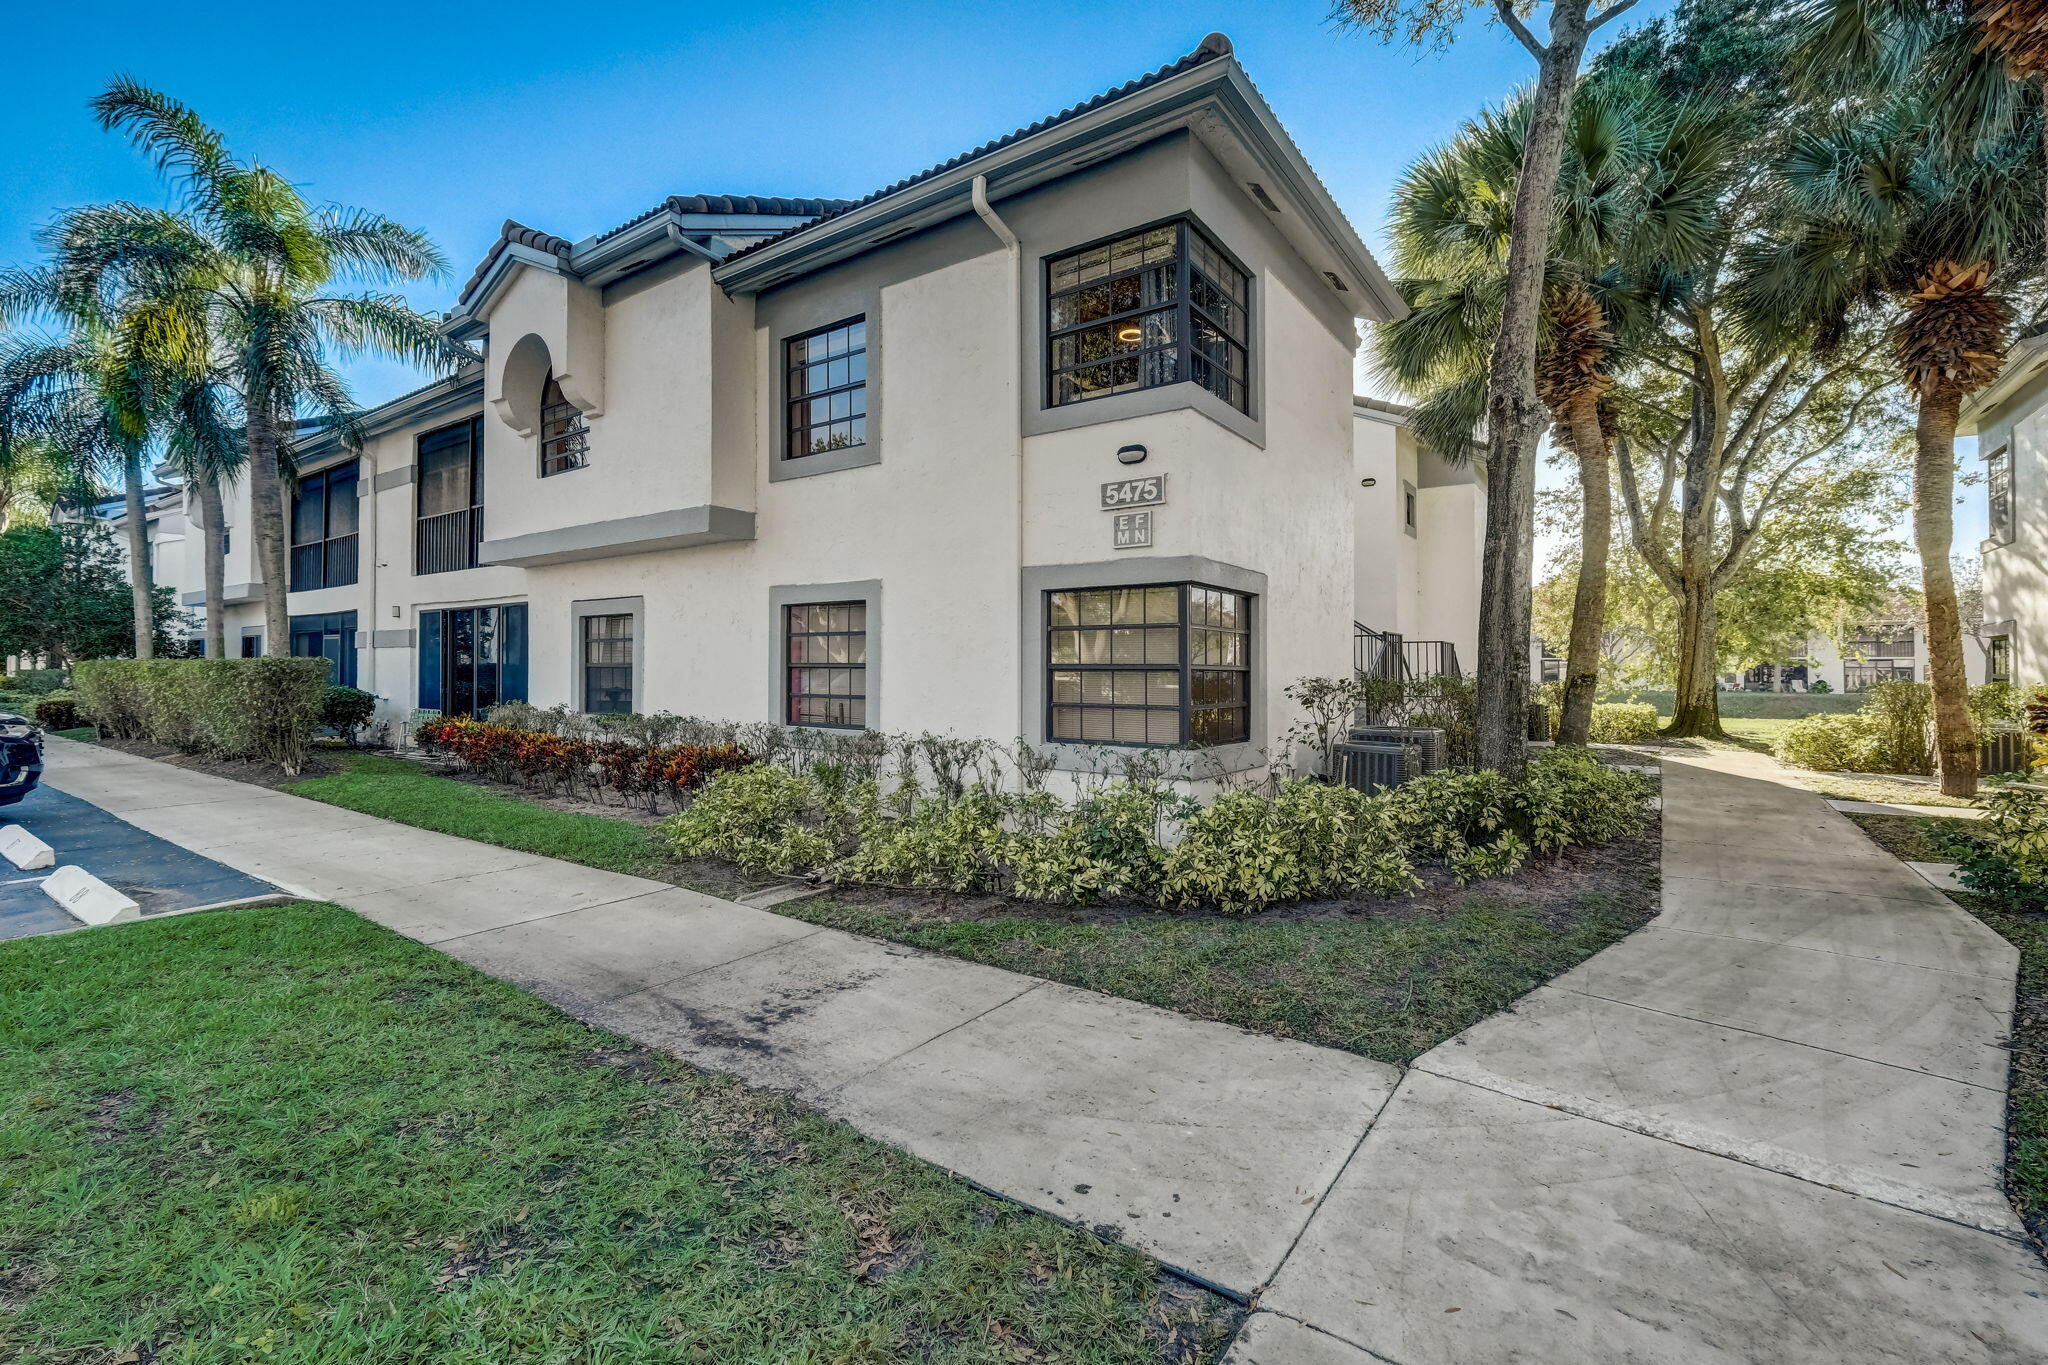 Property for Sale at 5475 Verona Drive N, Boynton Beach, Palm Beach County, Florida - Bedrooms: 3 
Bathrooms: 2  - $360,000